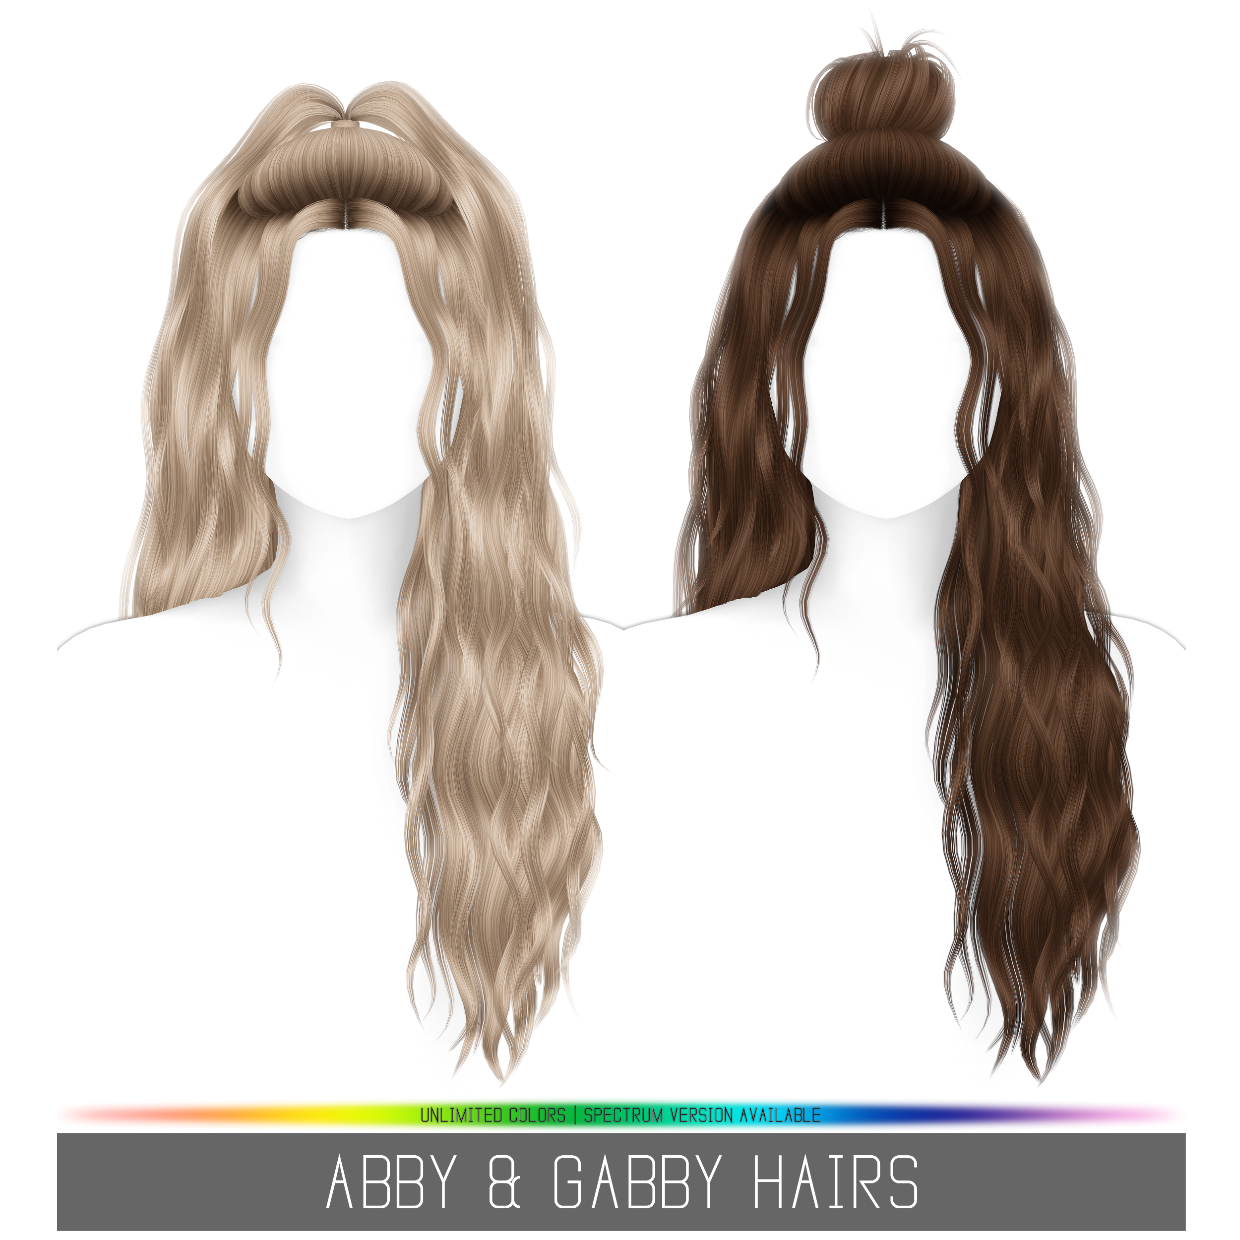 Install Simpliciaty's Abby & Gabby Hairs - The Sims 4 Mods - CurseForge